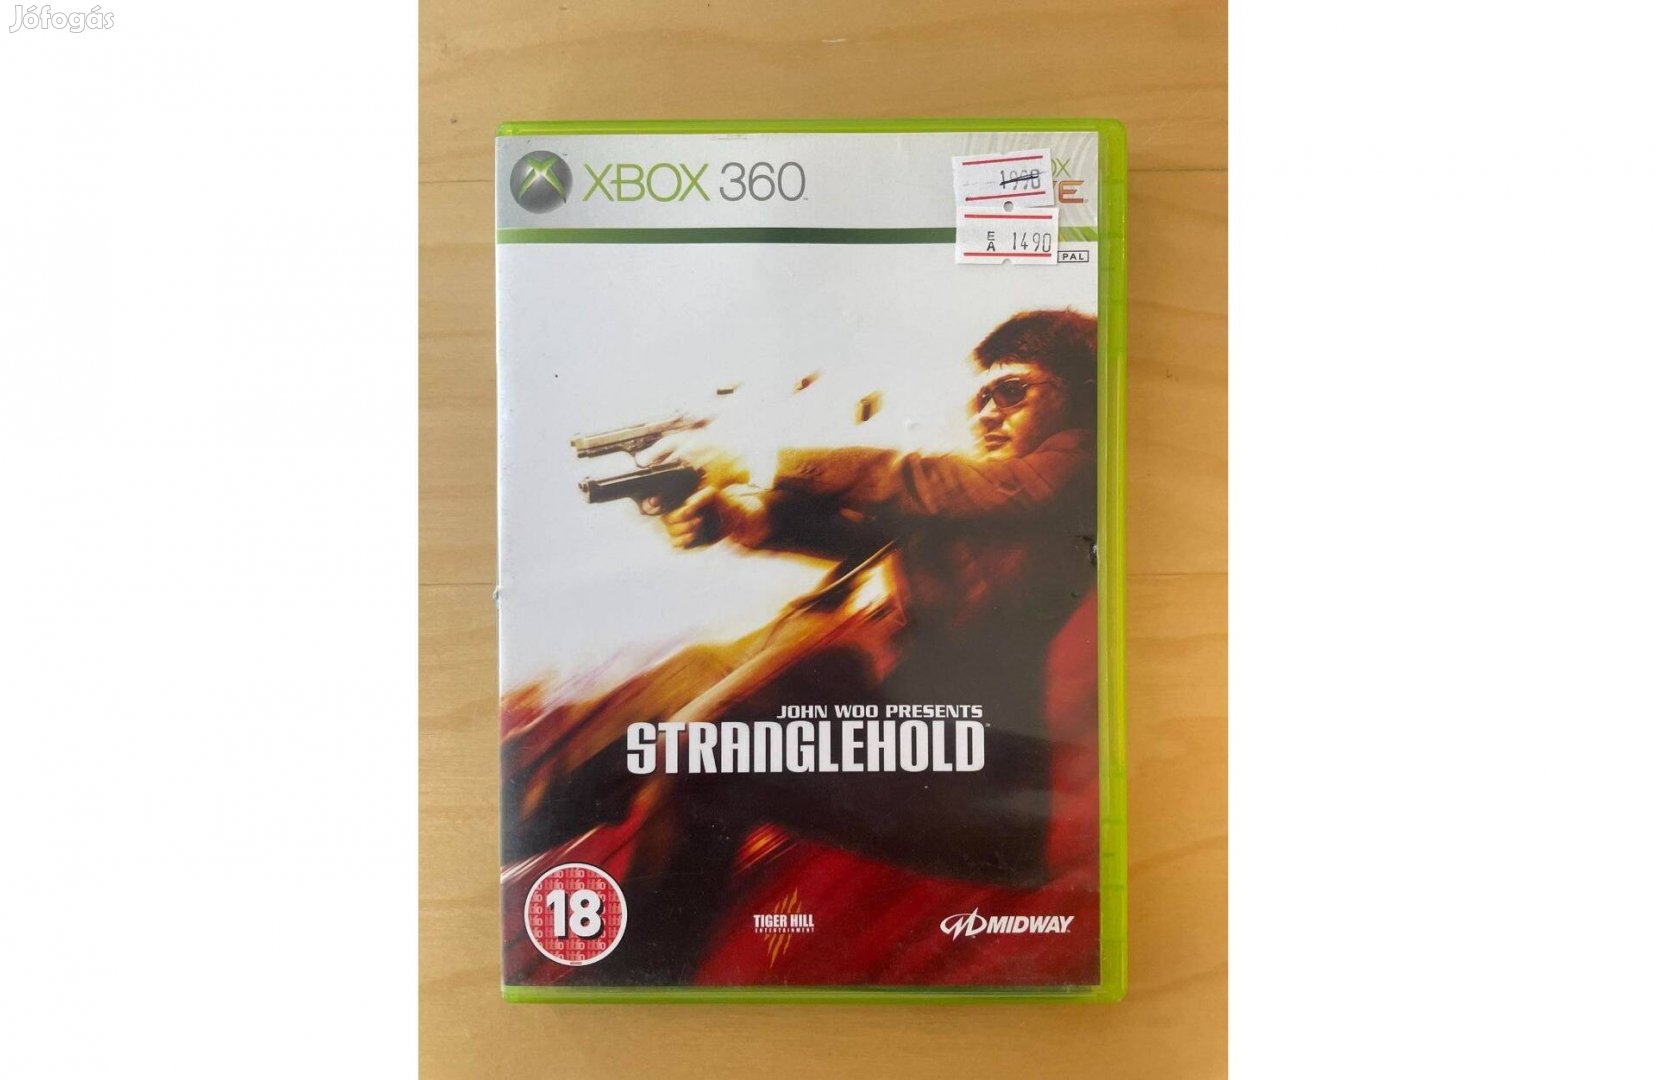 Xbox 360 John Woo Presents Stranglehold